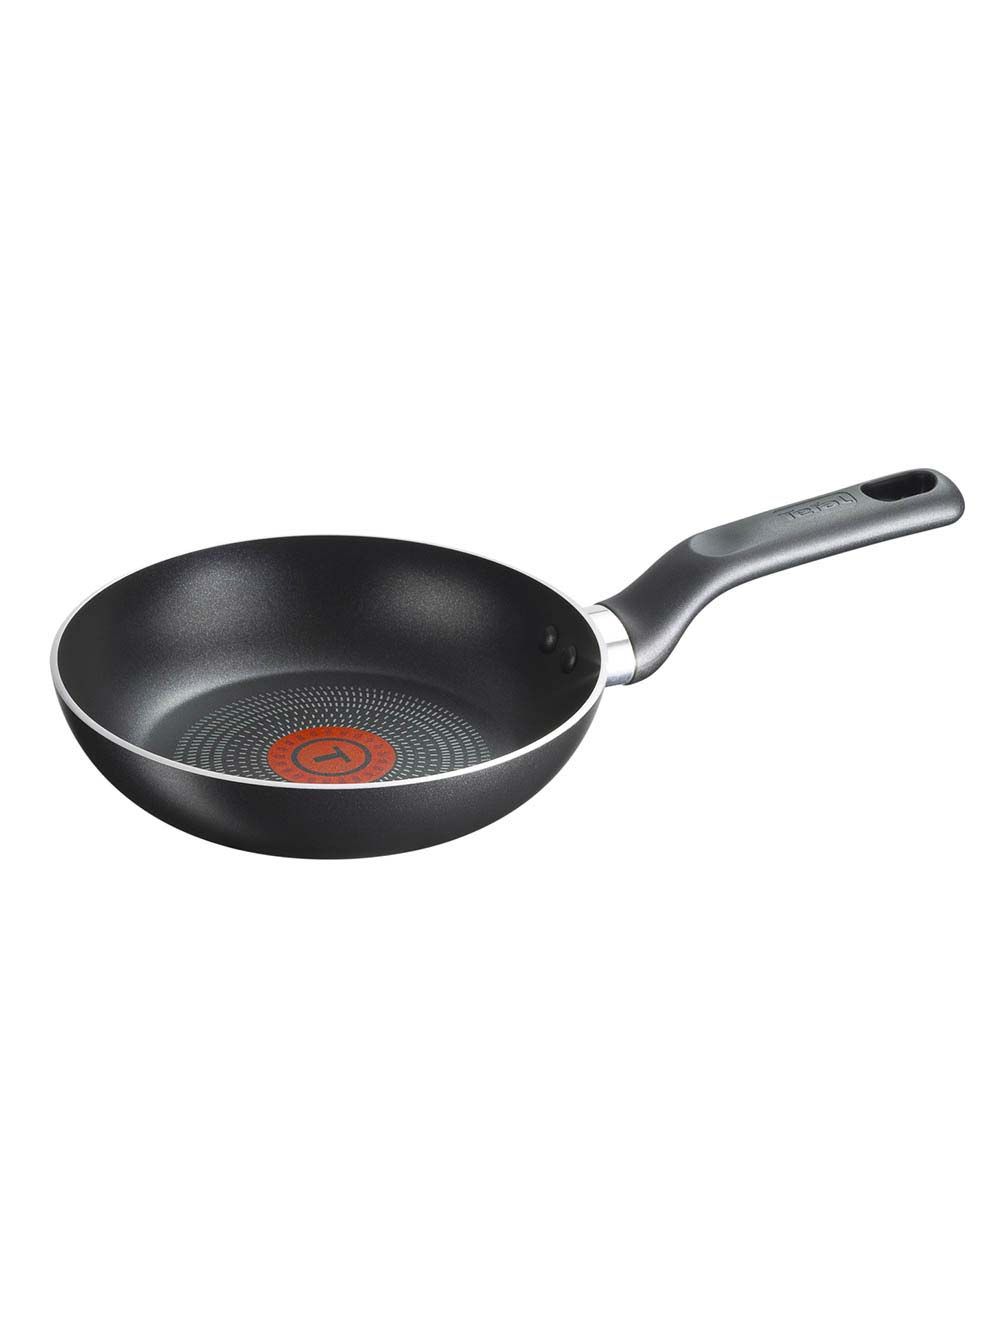 Tefal Super Cook Non-Stick Fry Pan 20 cm,B1430284